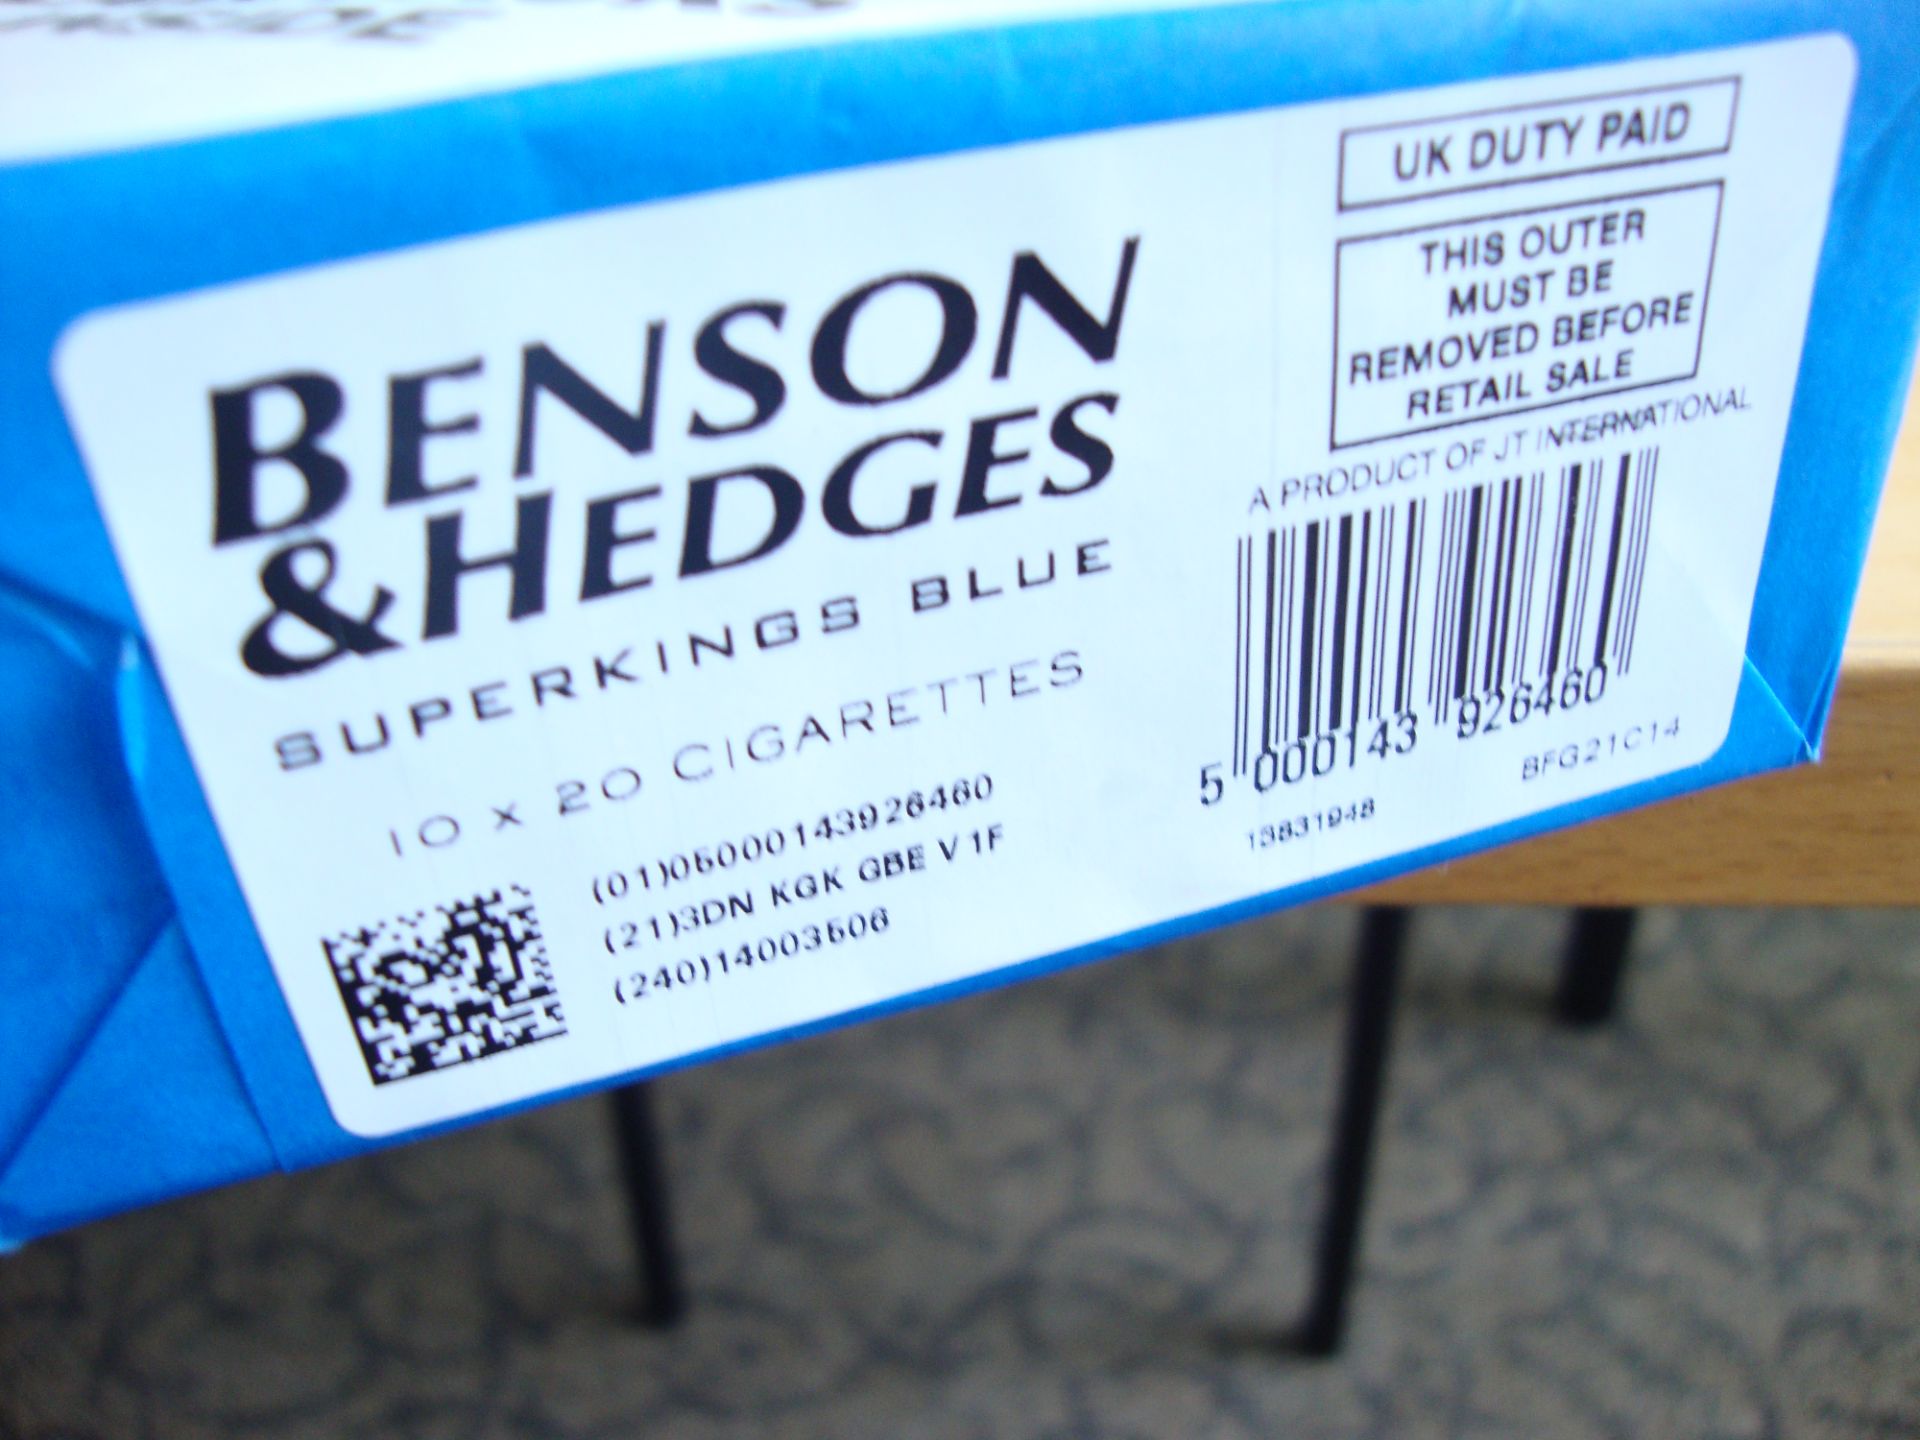 Carton of 200 Benson & Hedges Superkings Blue cigarettes - Image 2 of 3